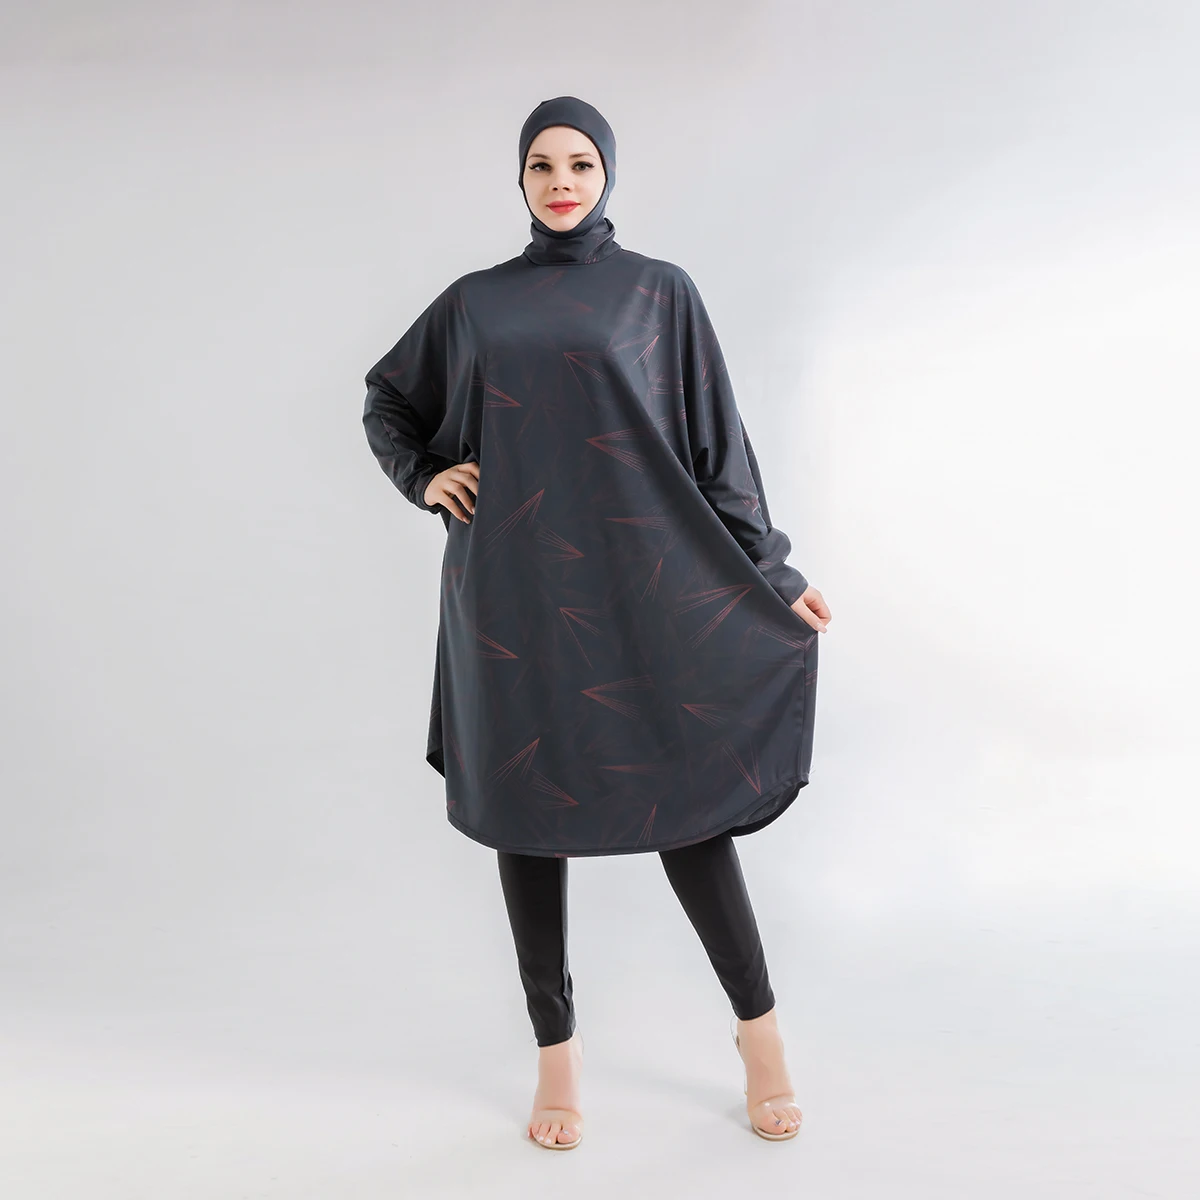 

MOTIVE FORCE Top Sale Bronzing Printing Islamic Swimsuit For Muslim Woman 3pcs Burkini Set